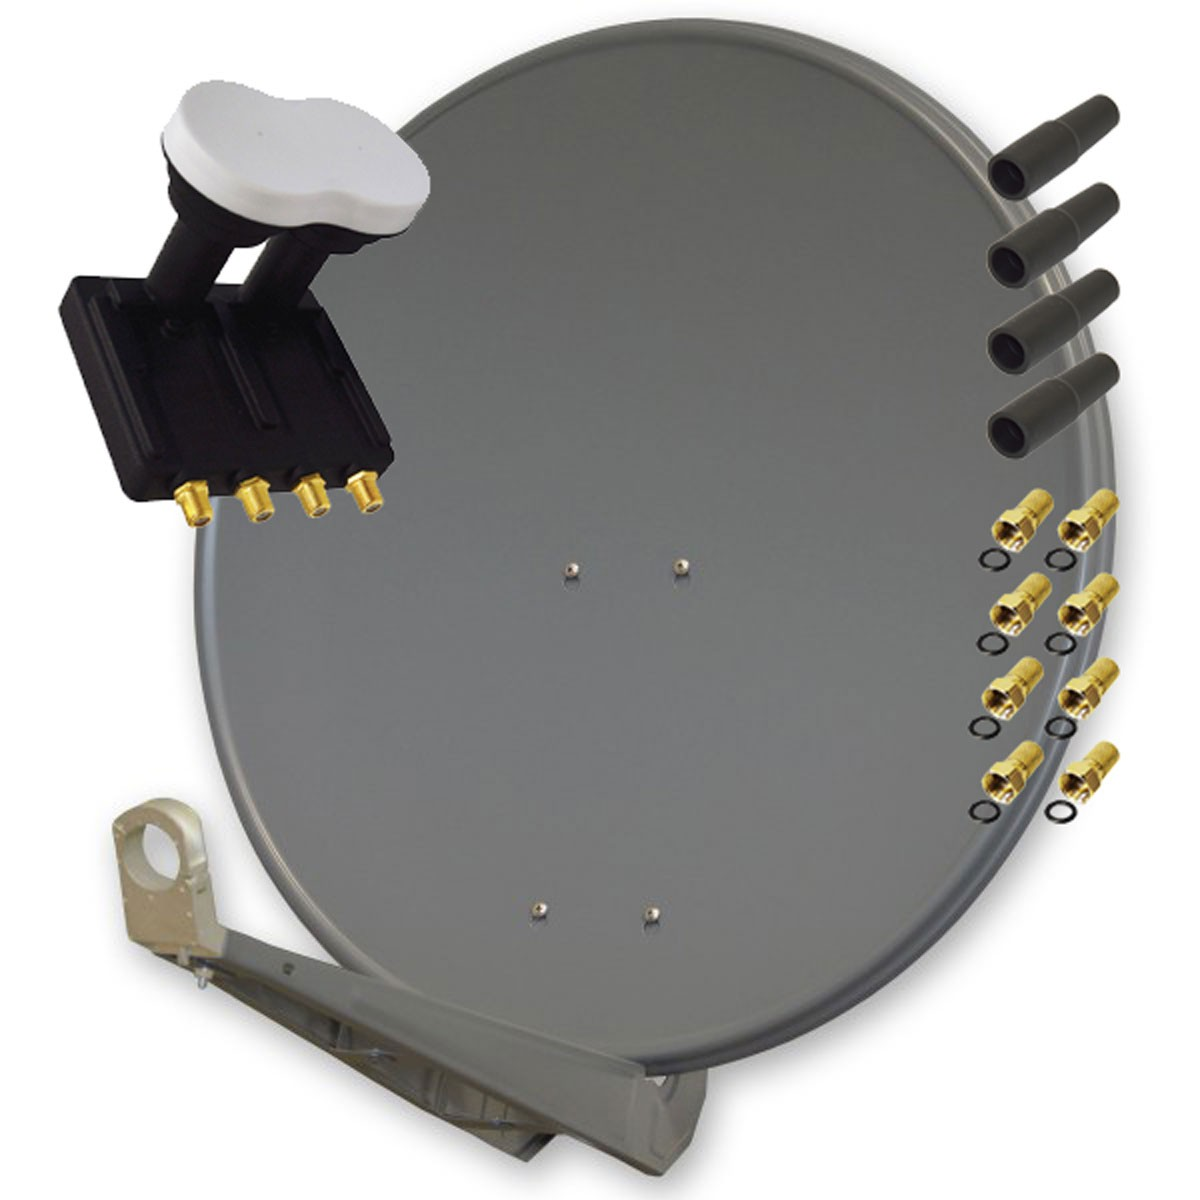 PREMIUMX Deluxe 85 Alu SAT Quad Antenne mit Teilnehmer Monoblock Monoblock (85 LNB LNB) cm, Anthrazit in Quad 4 für Anlage 3° Sat